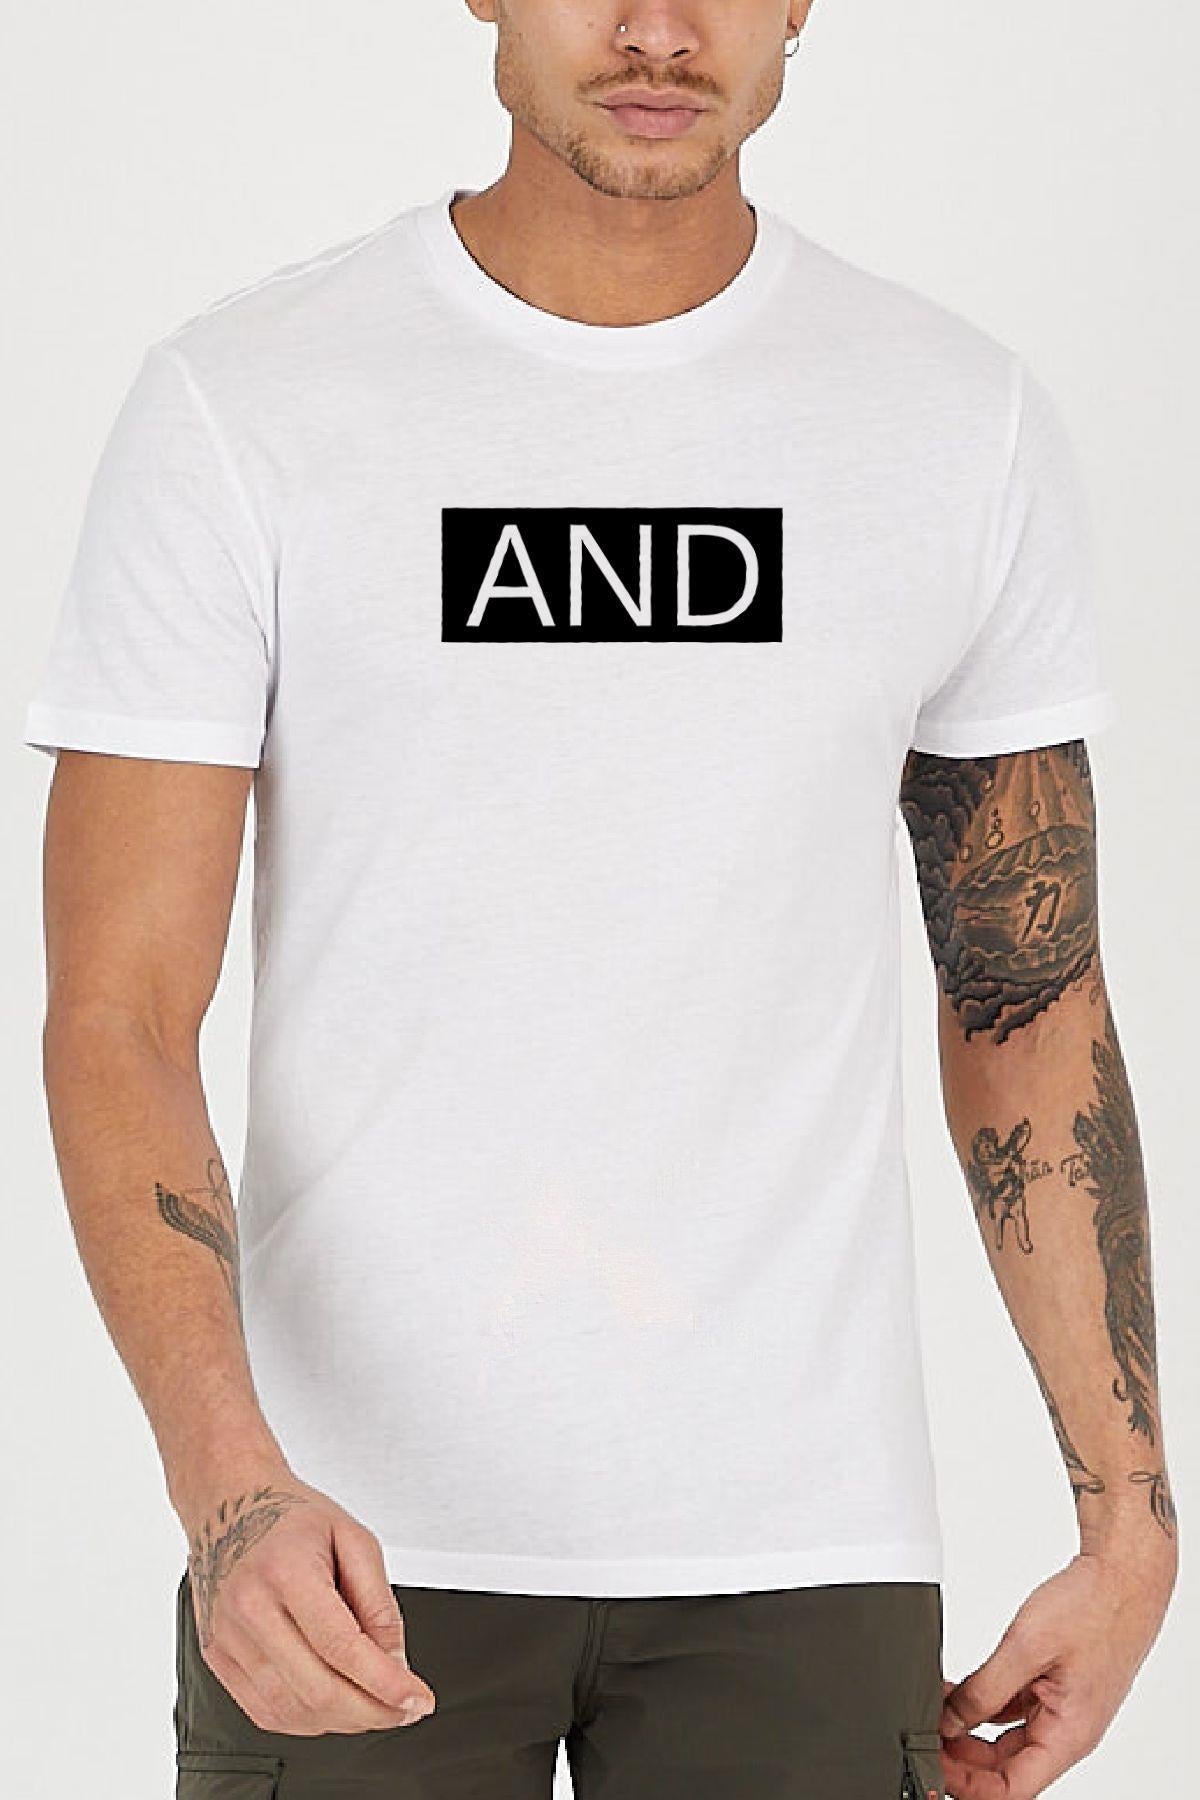 And slogan printed Crew Neck men's t -shirt